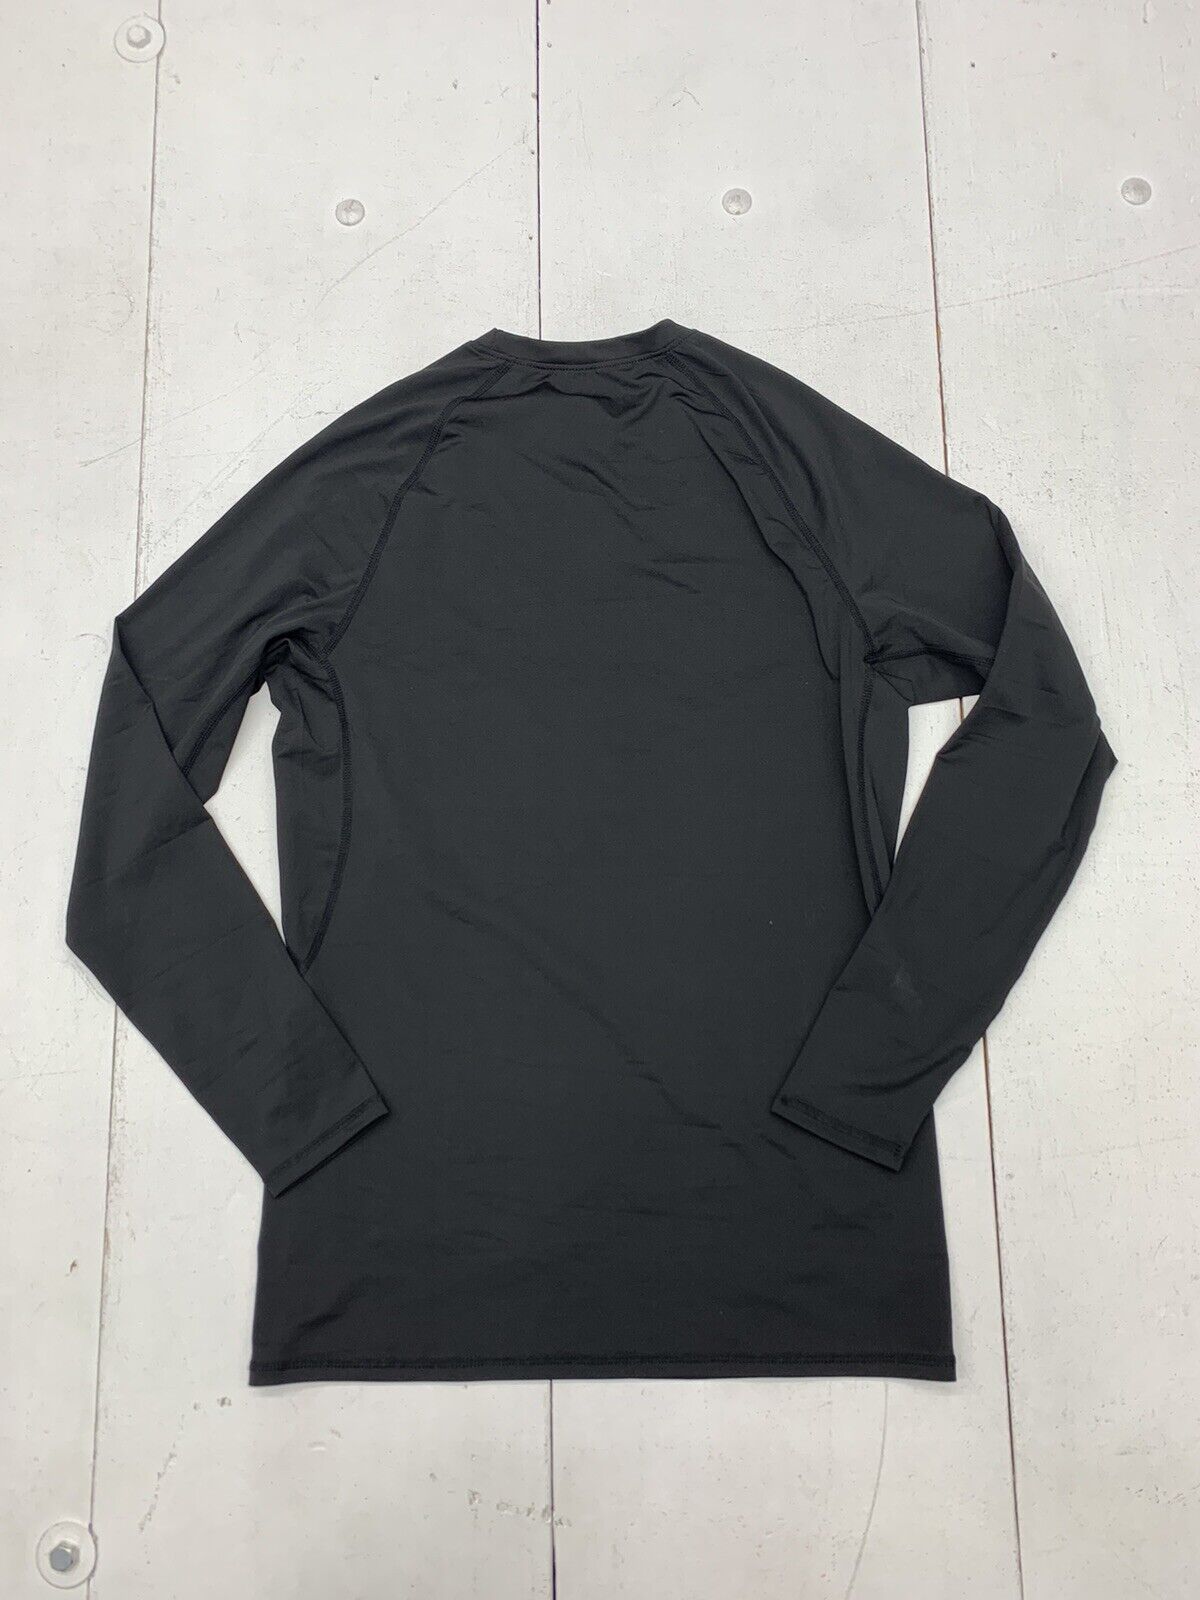 Hoplynn Womens Black Athletic Long Sleeve Shirt Size Large